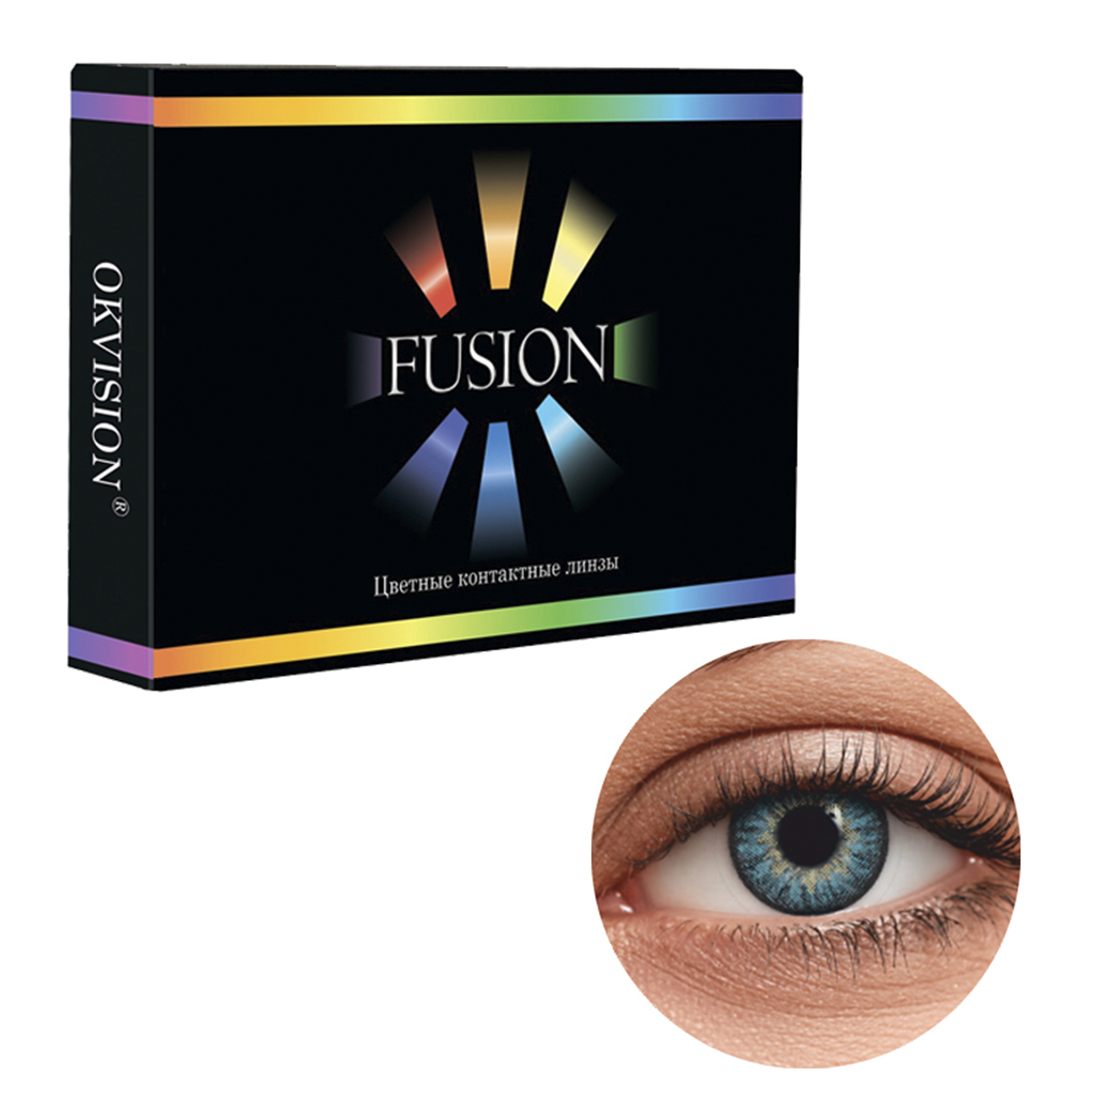 Цветные контактные линзы OKVision Fusion monthly R 8.6 -3.00 цвет Sky Blue 2 шт 1 месяц - фото 1